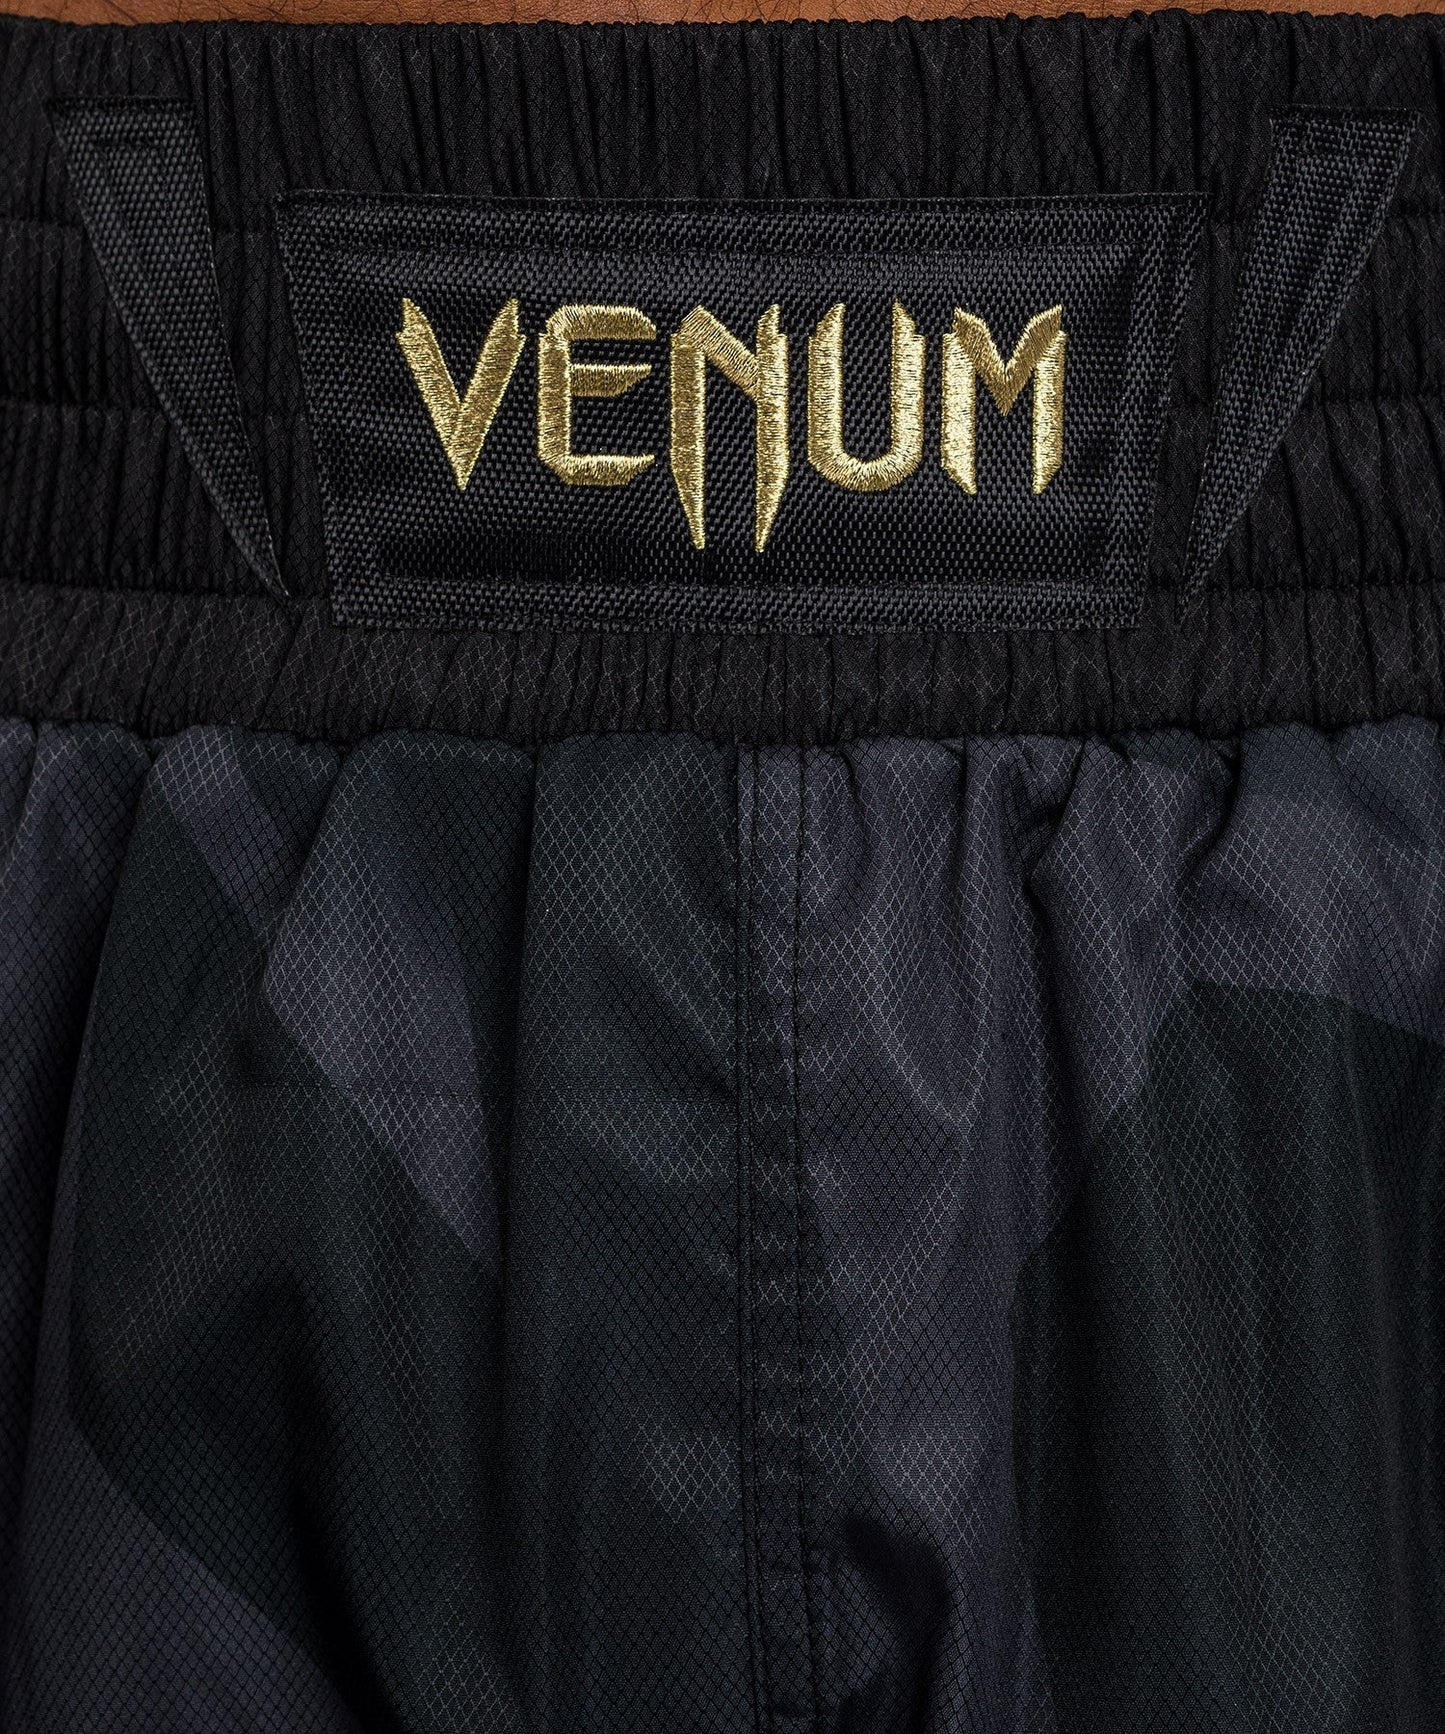 Venum Razor Boxing Shorts - Black/Gold